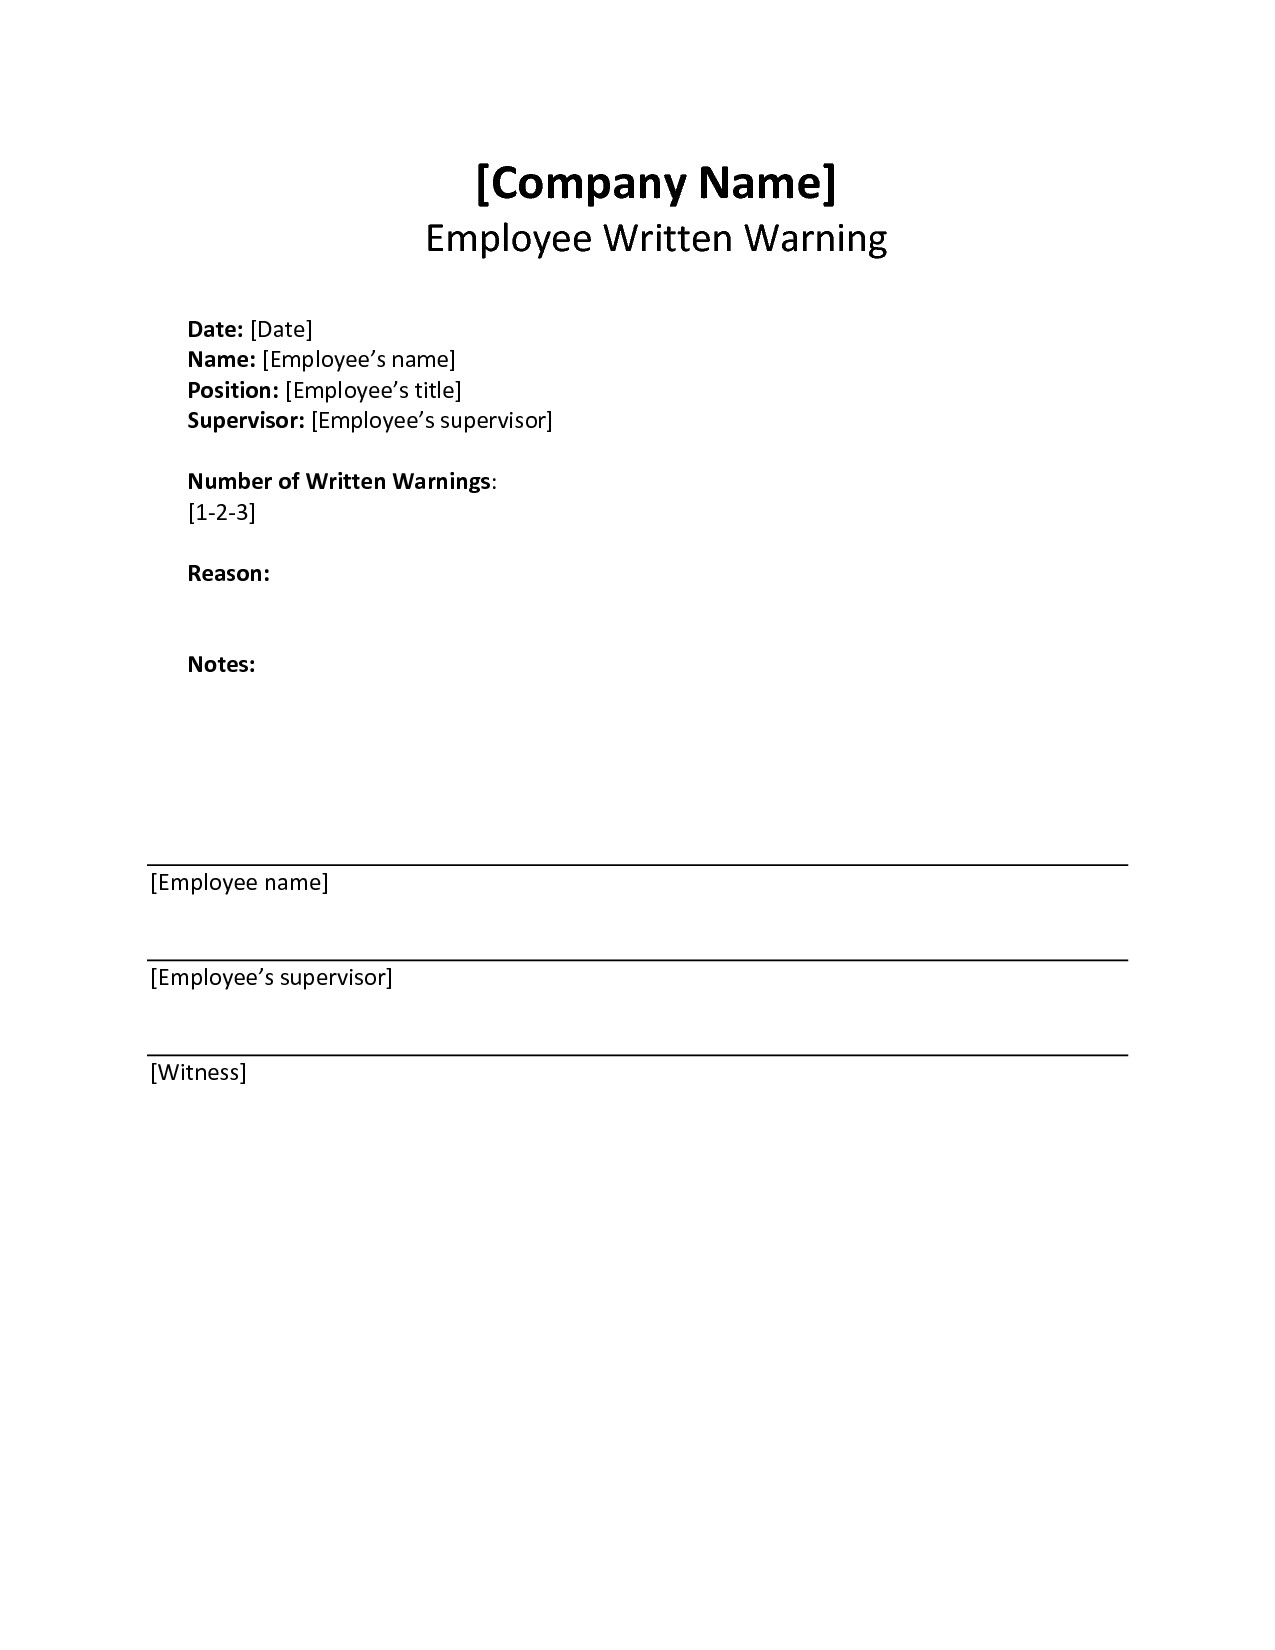 Employee Written Warning Template Written Warning Template